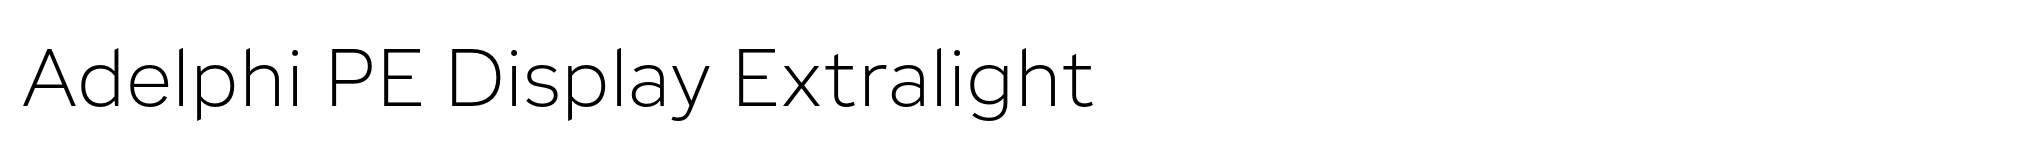 Adelphi PE Display Extralight image